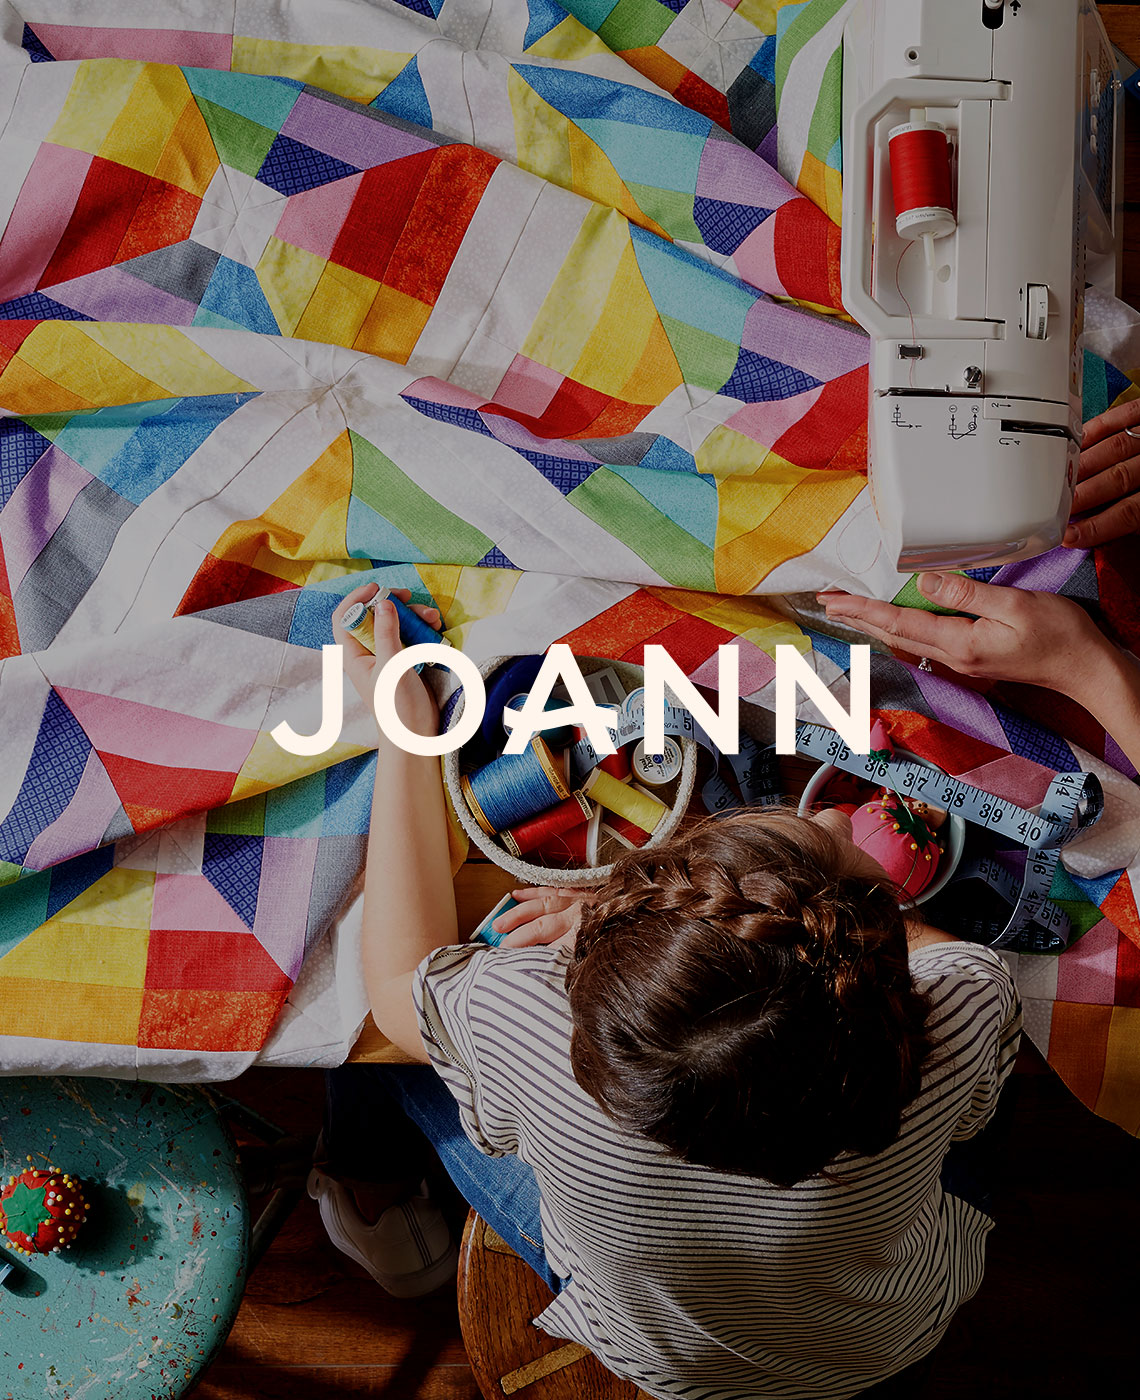 Joann Fabric